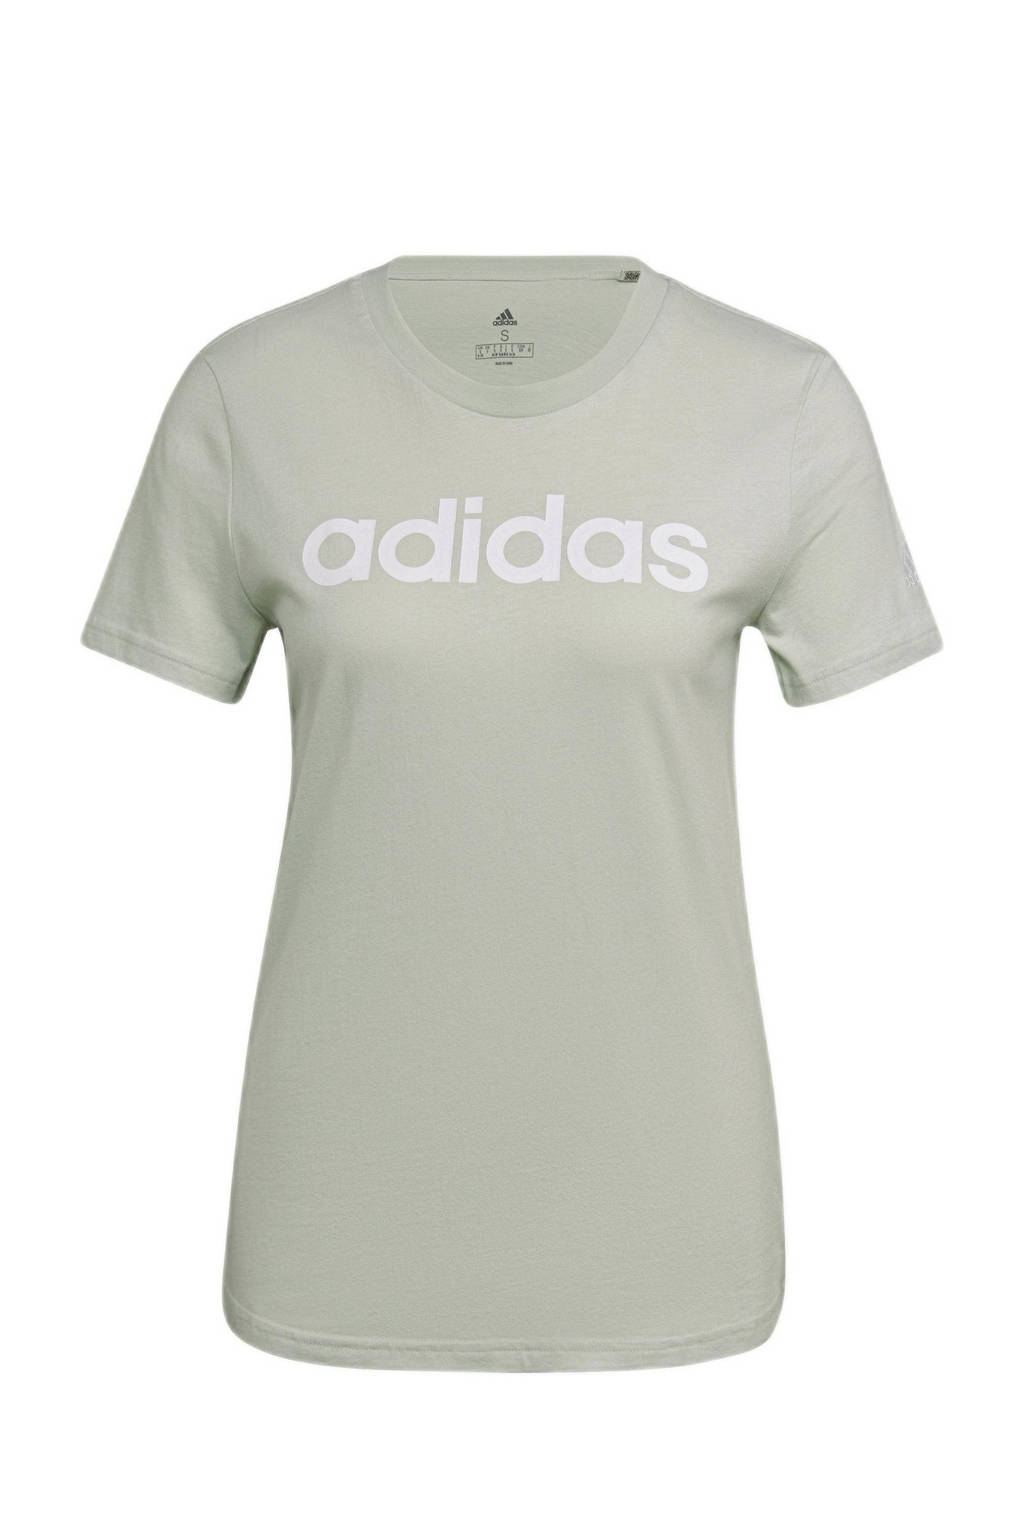 adidas Performance sport T-shirt lichtgroen/wit